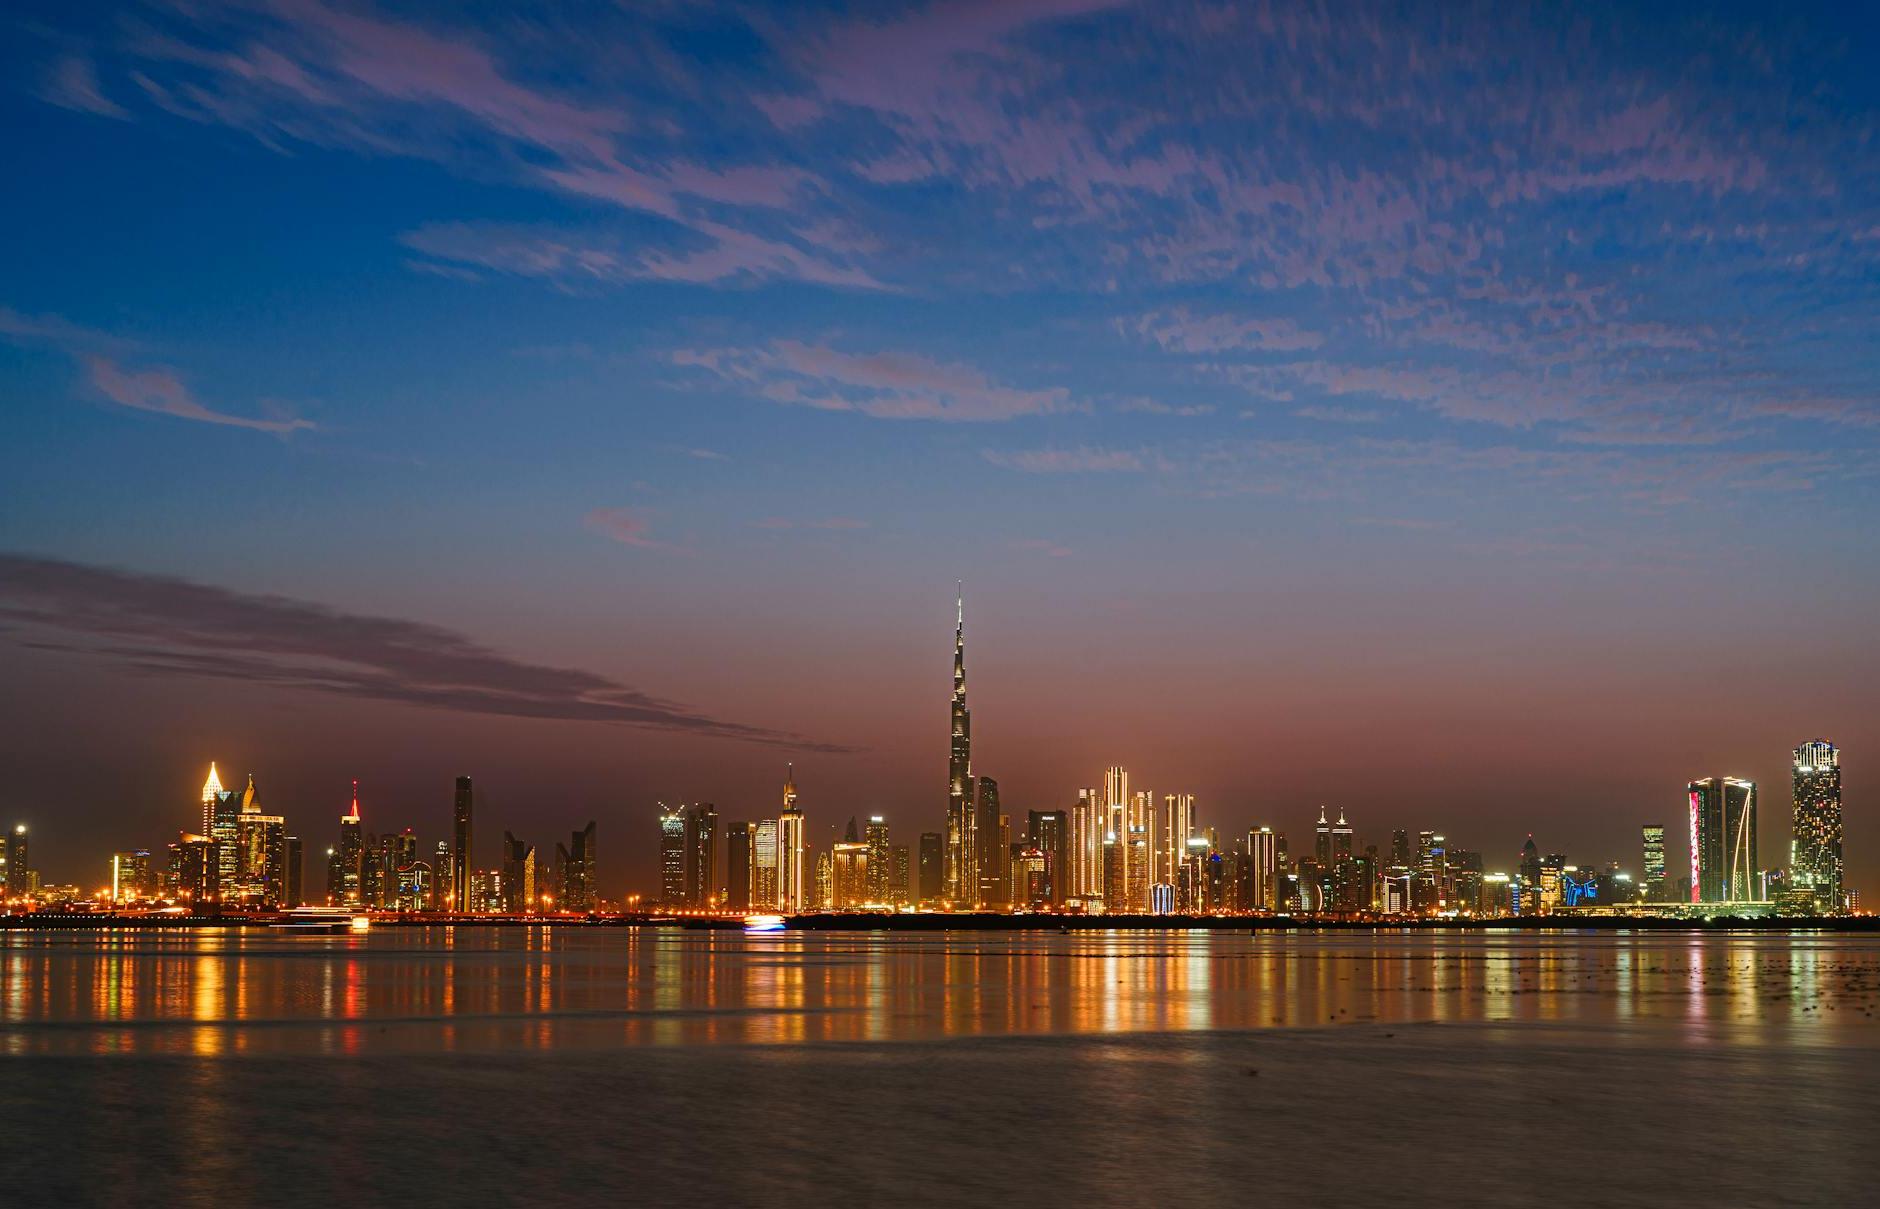 Illuminated Downtown of Dubai with Burj Khalifa